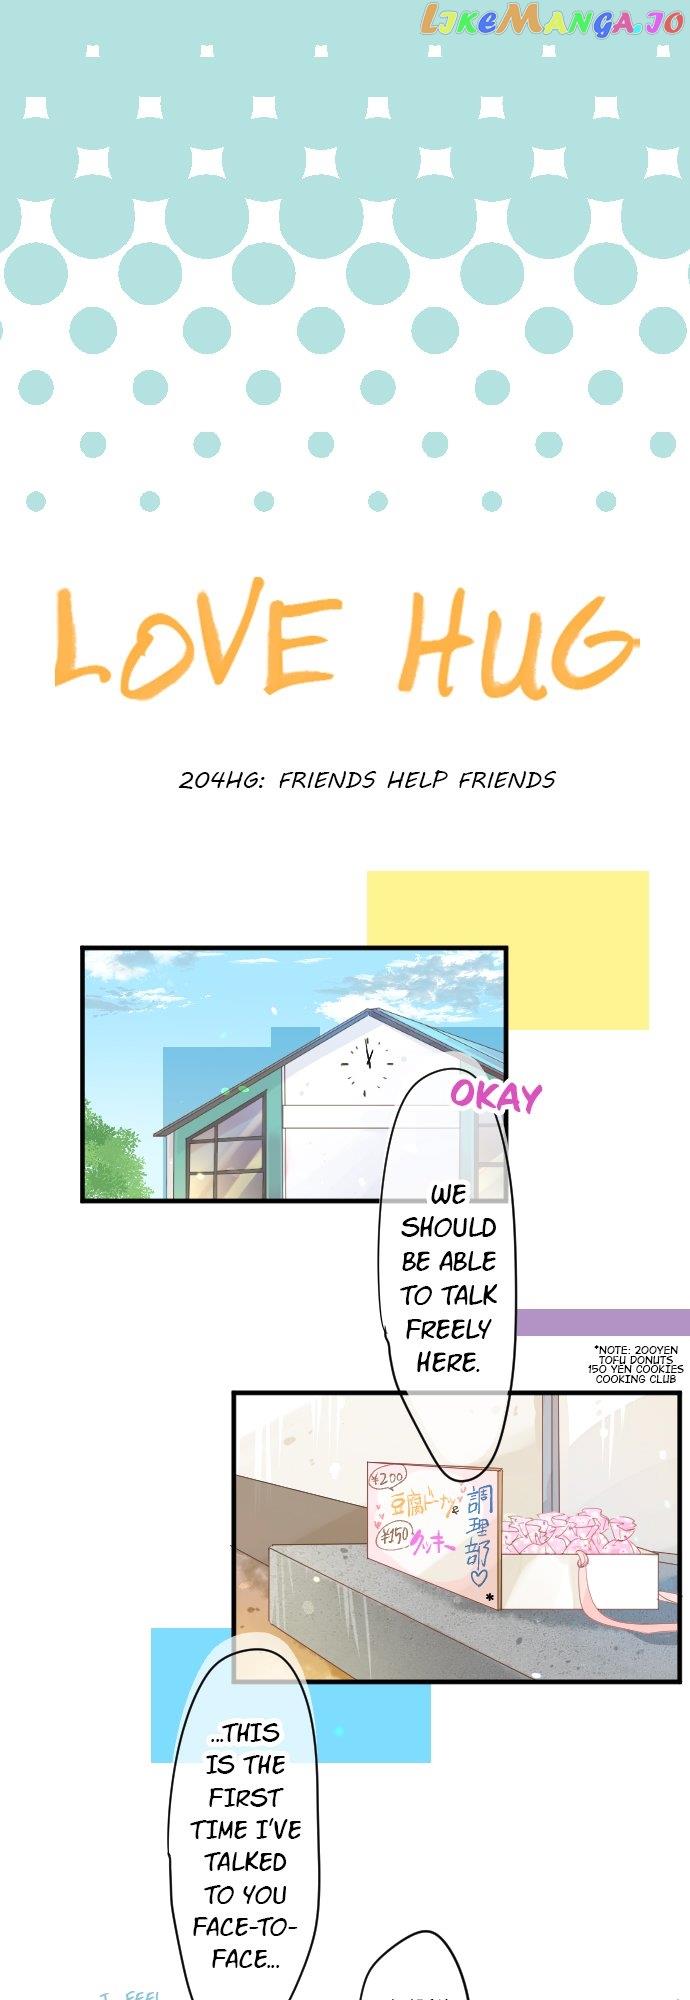 Love Hug - Page 3